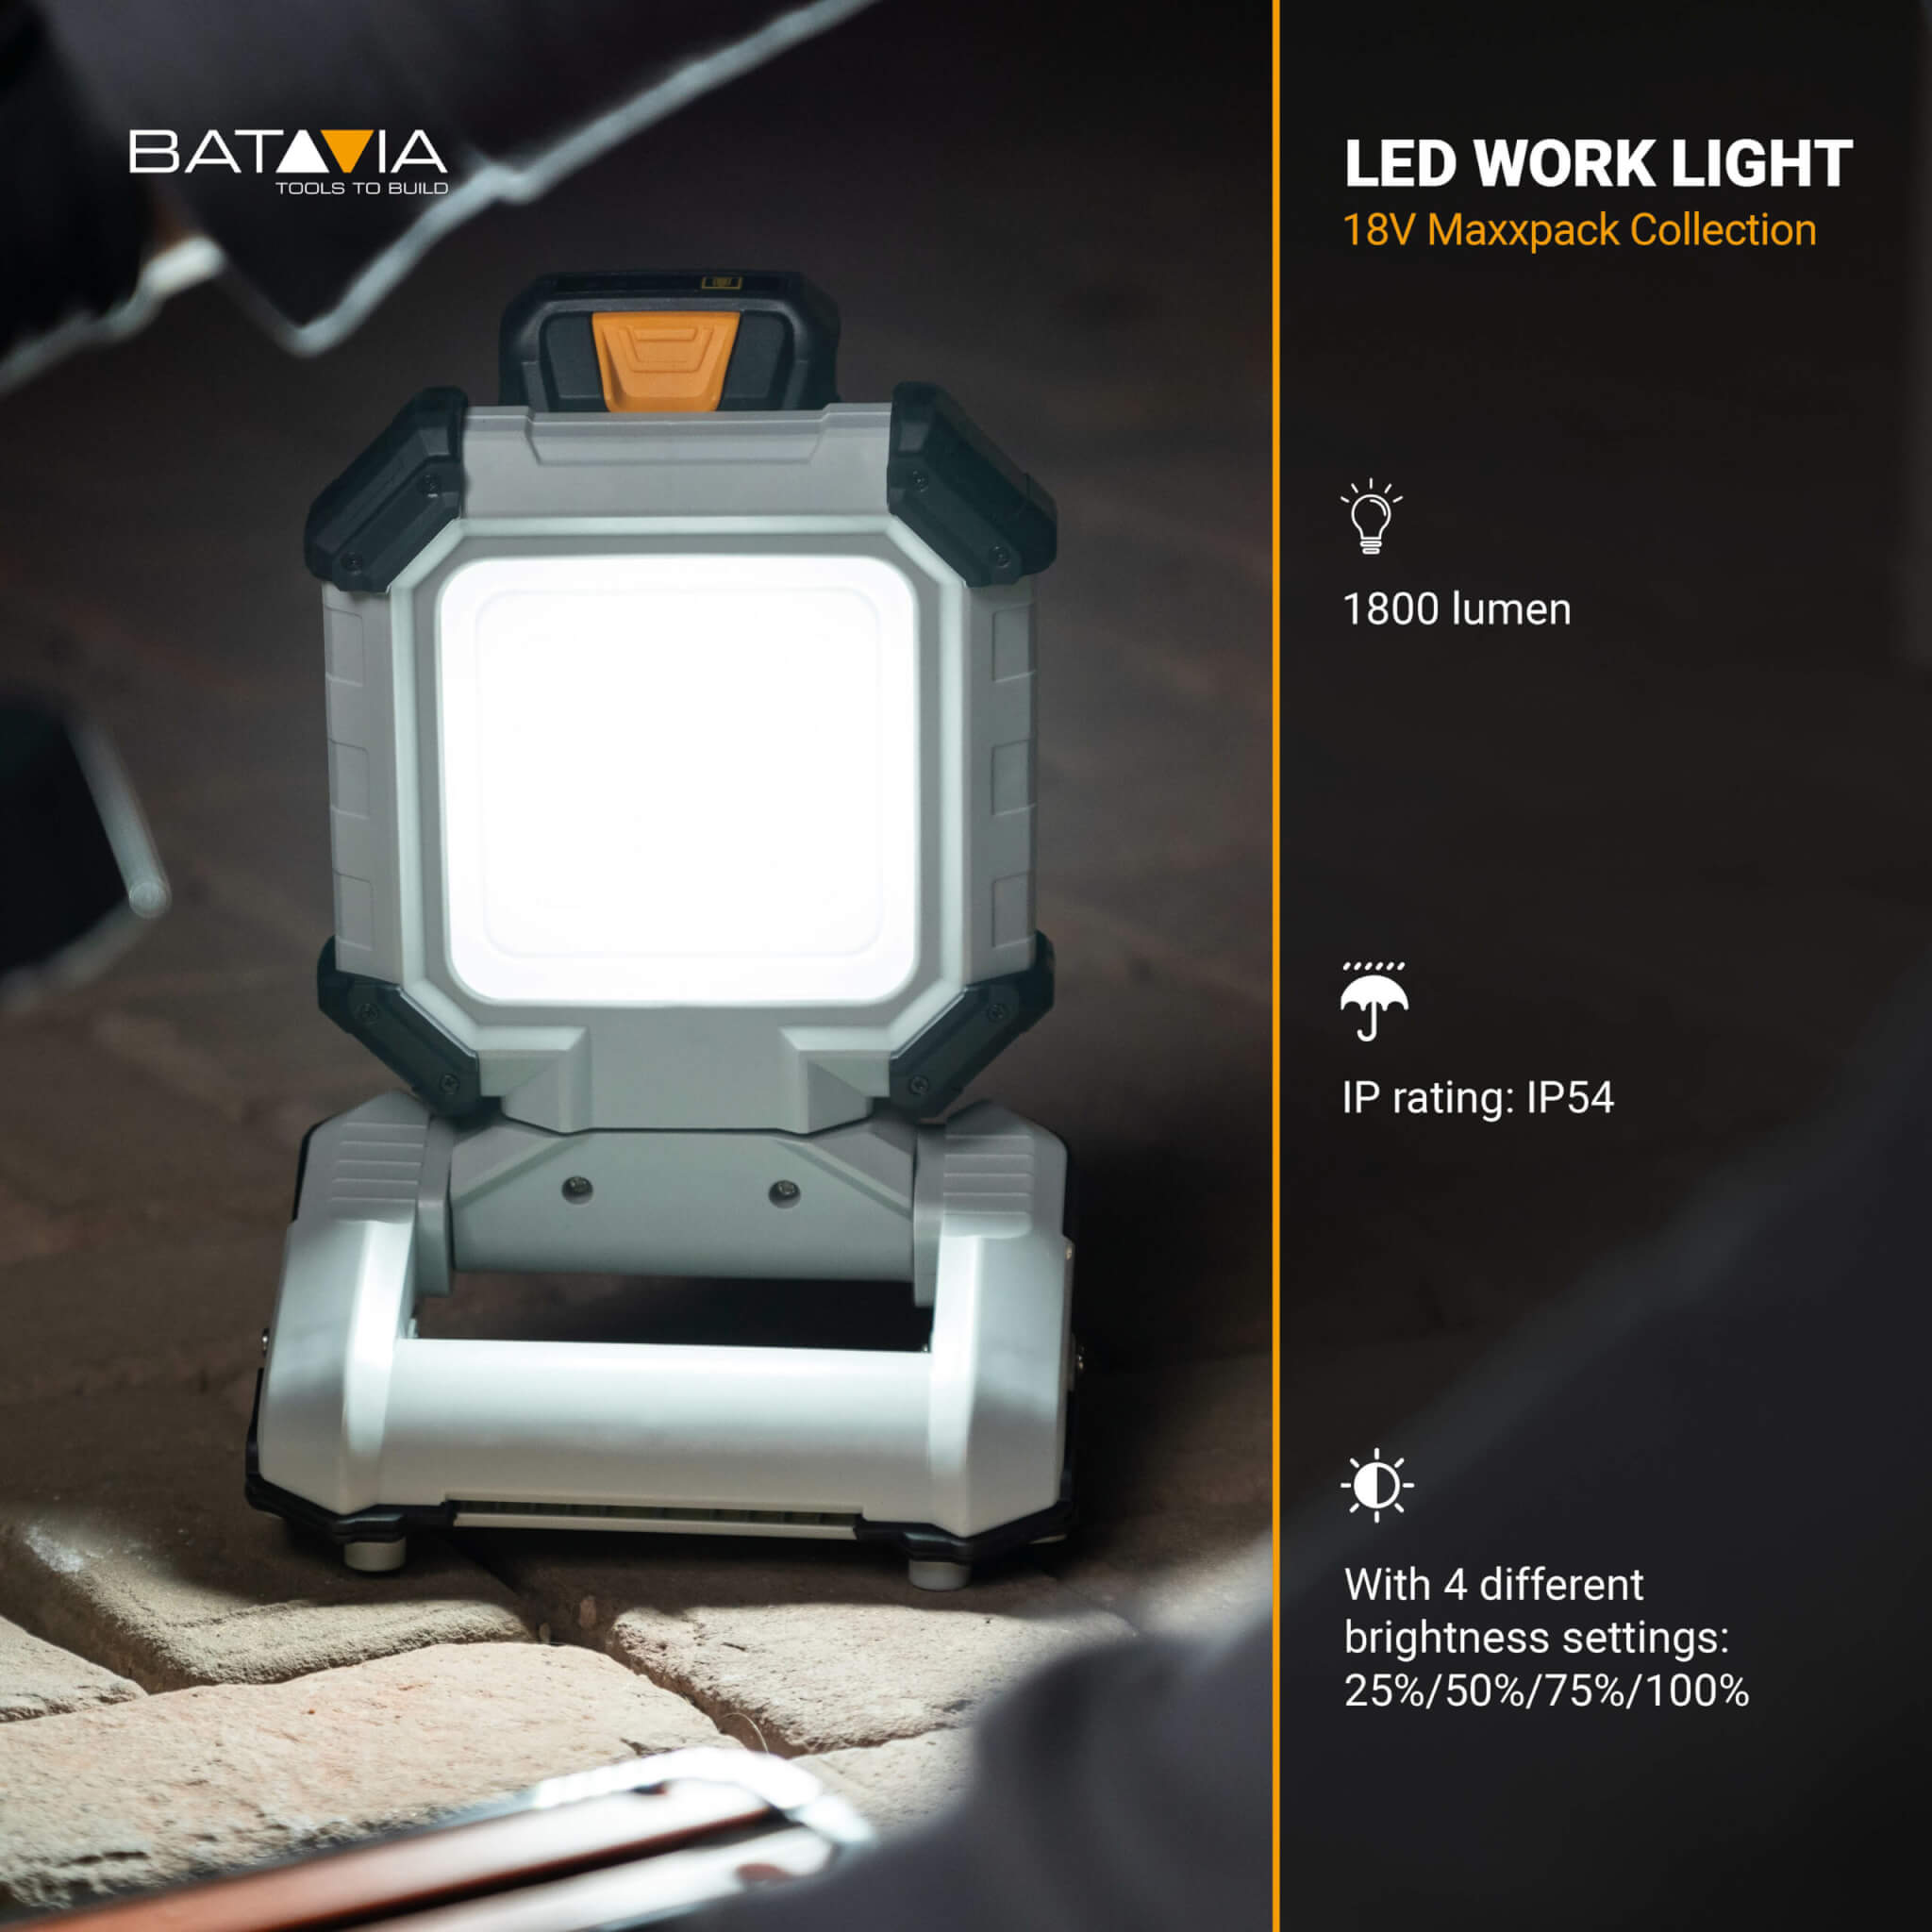 18V Battery powered work light | Maxxpack collection | Batavia